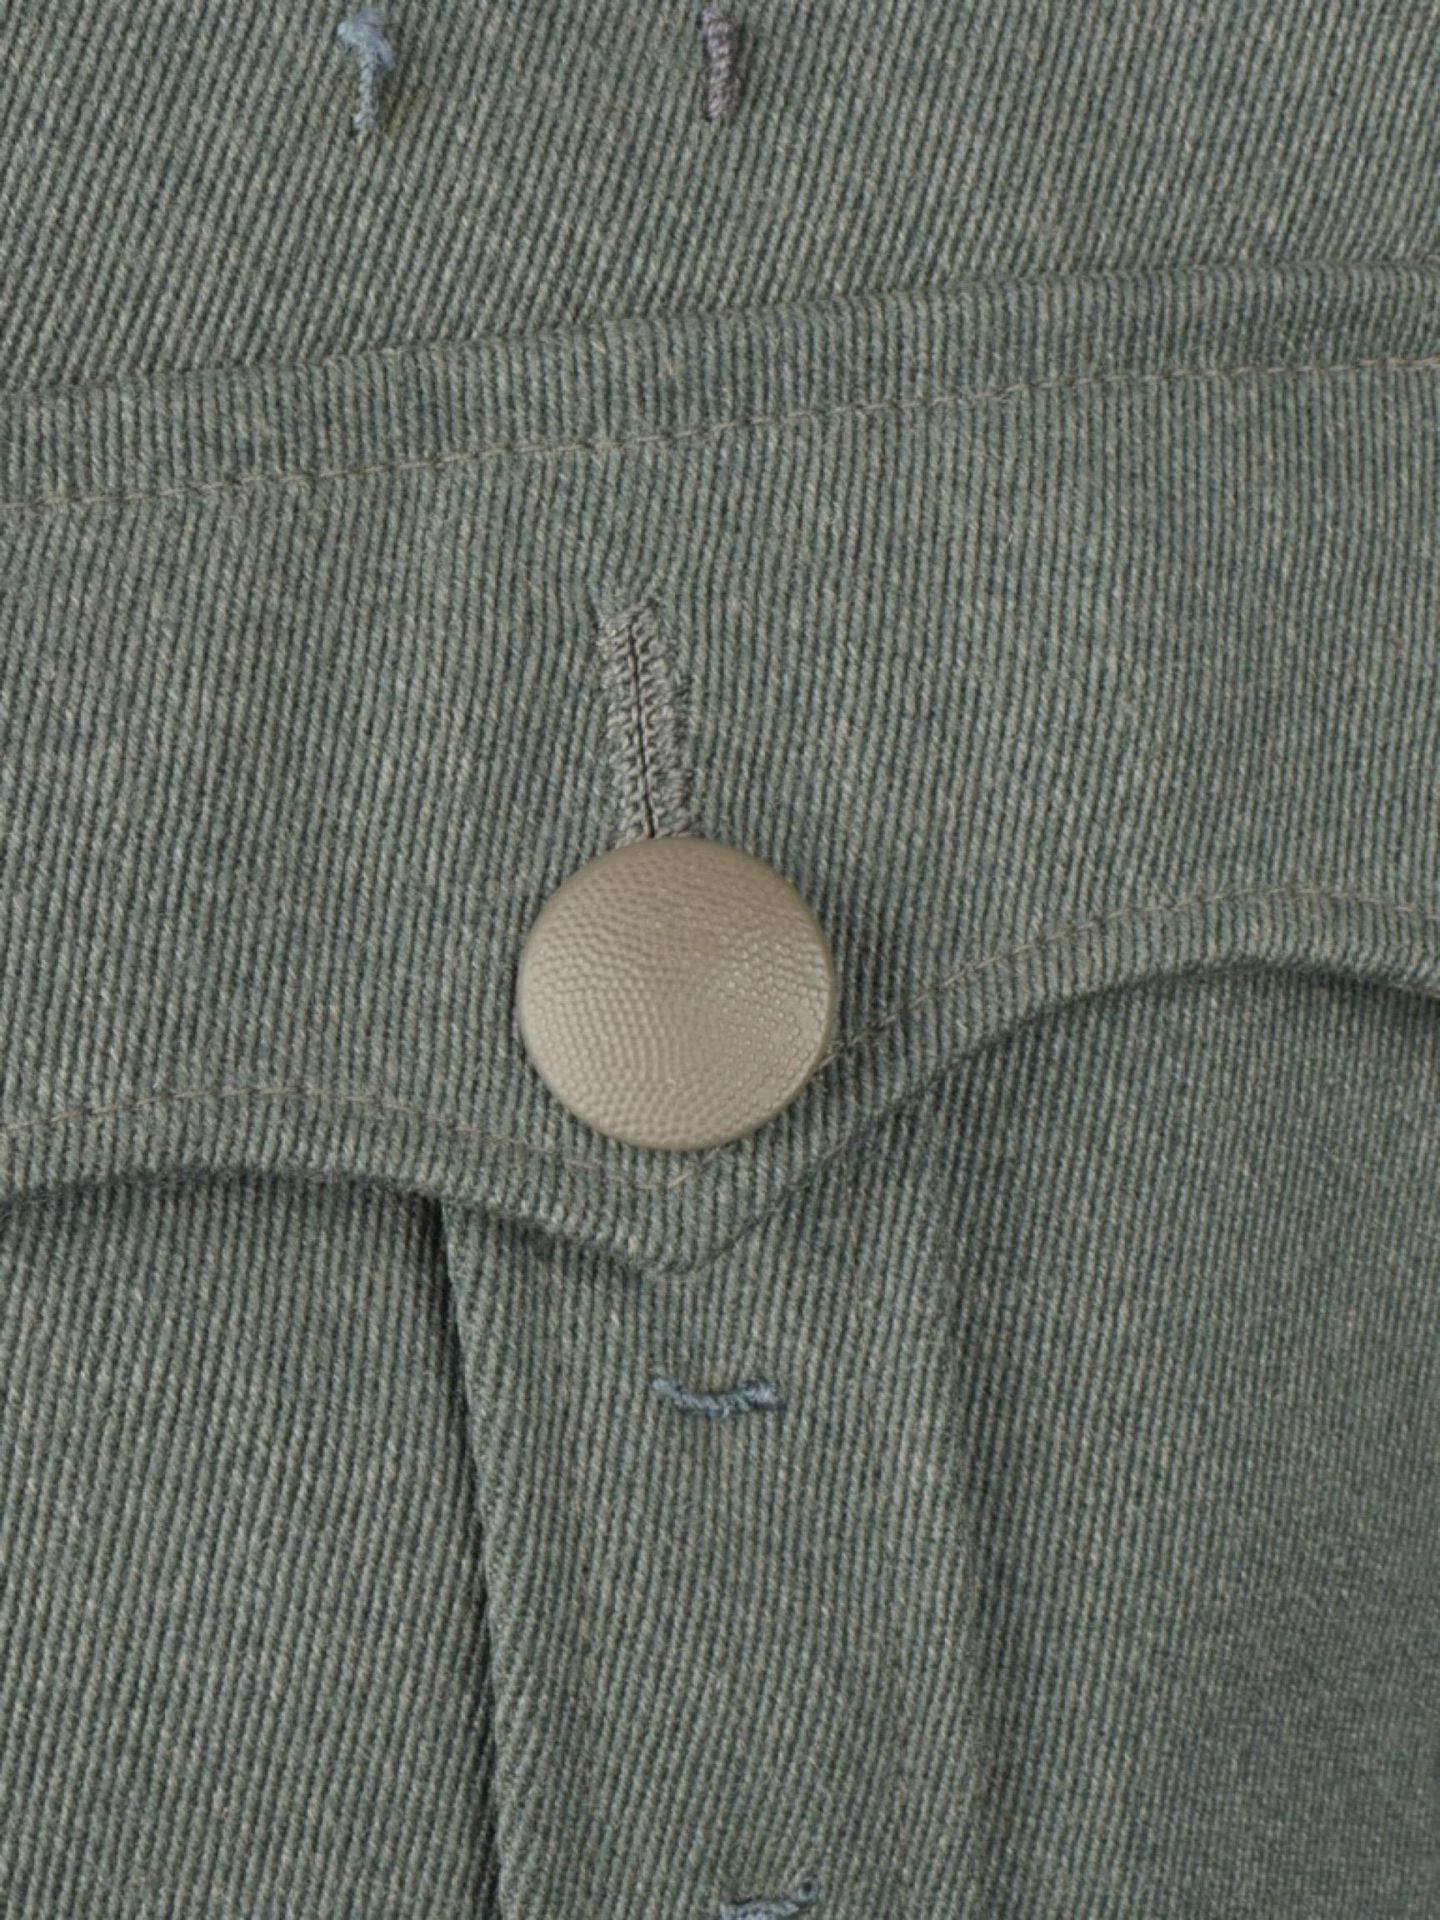 Vareuse officier Heer. Heer officer jacket.  - Image 4 of 10